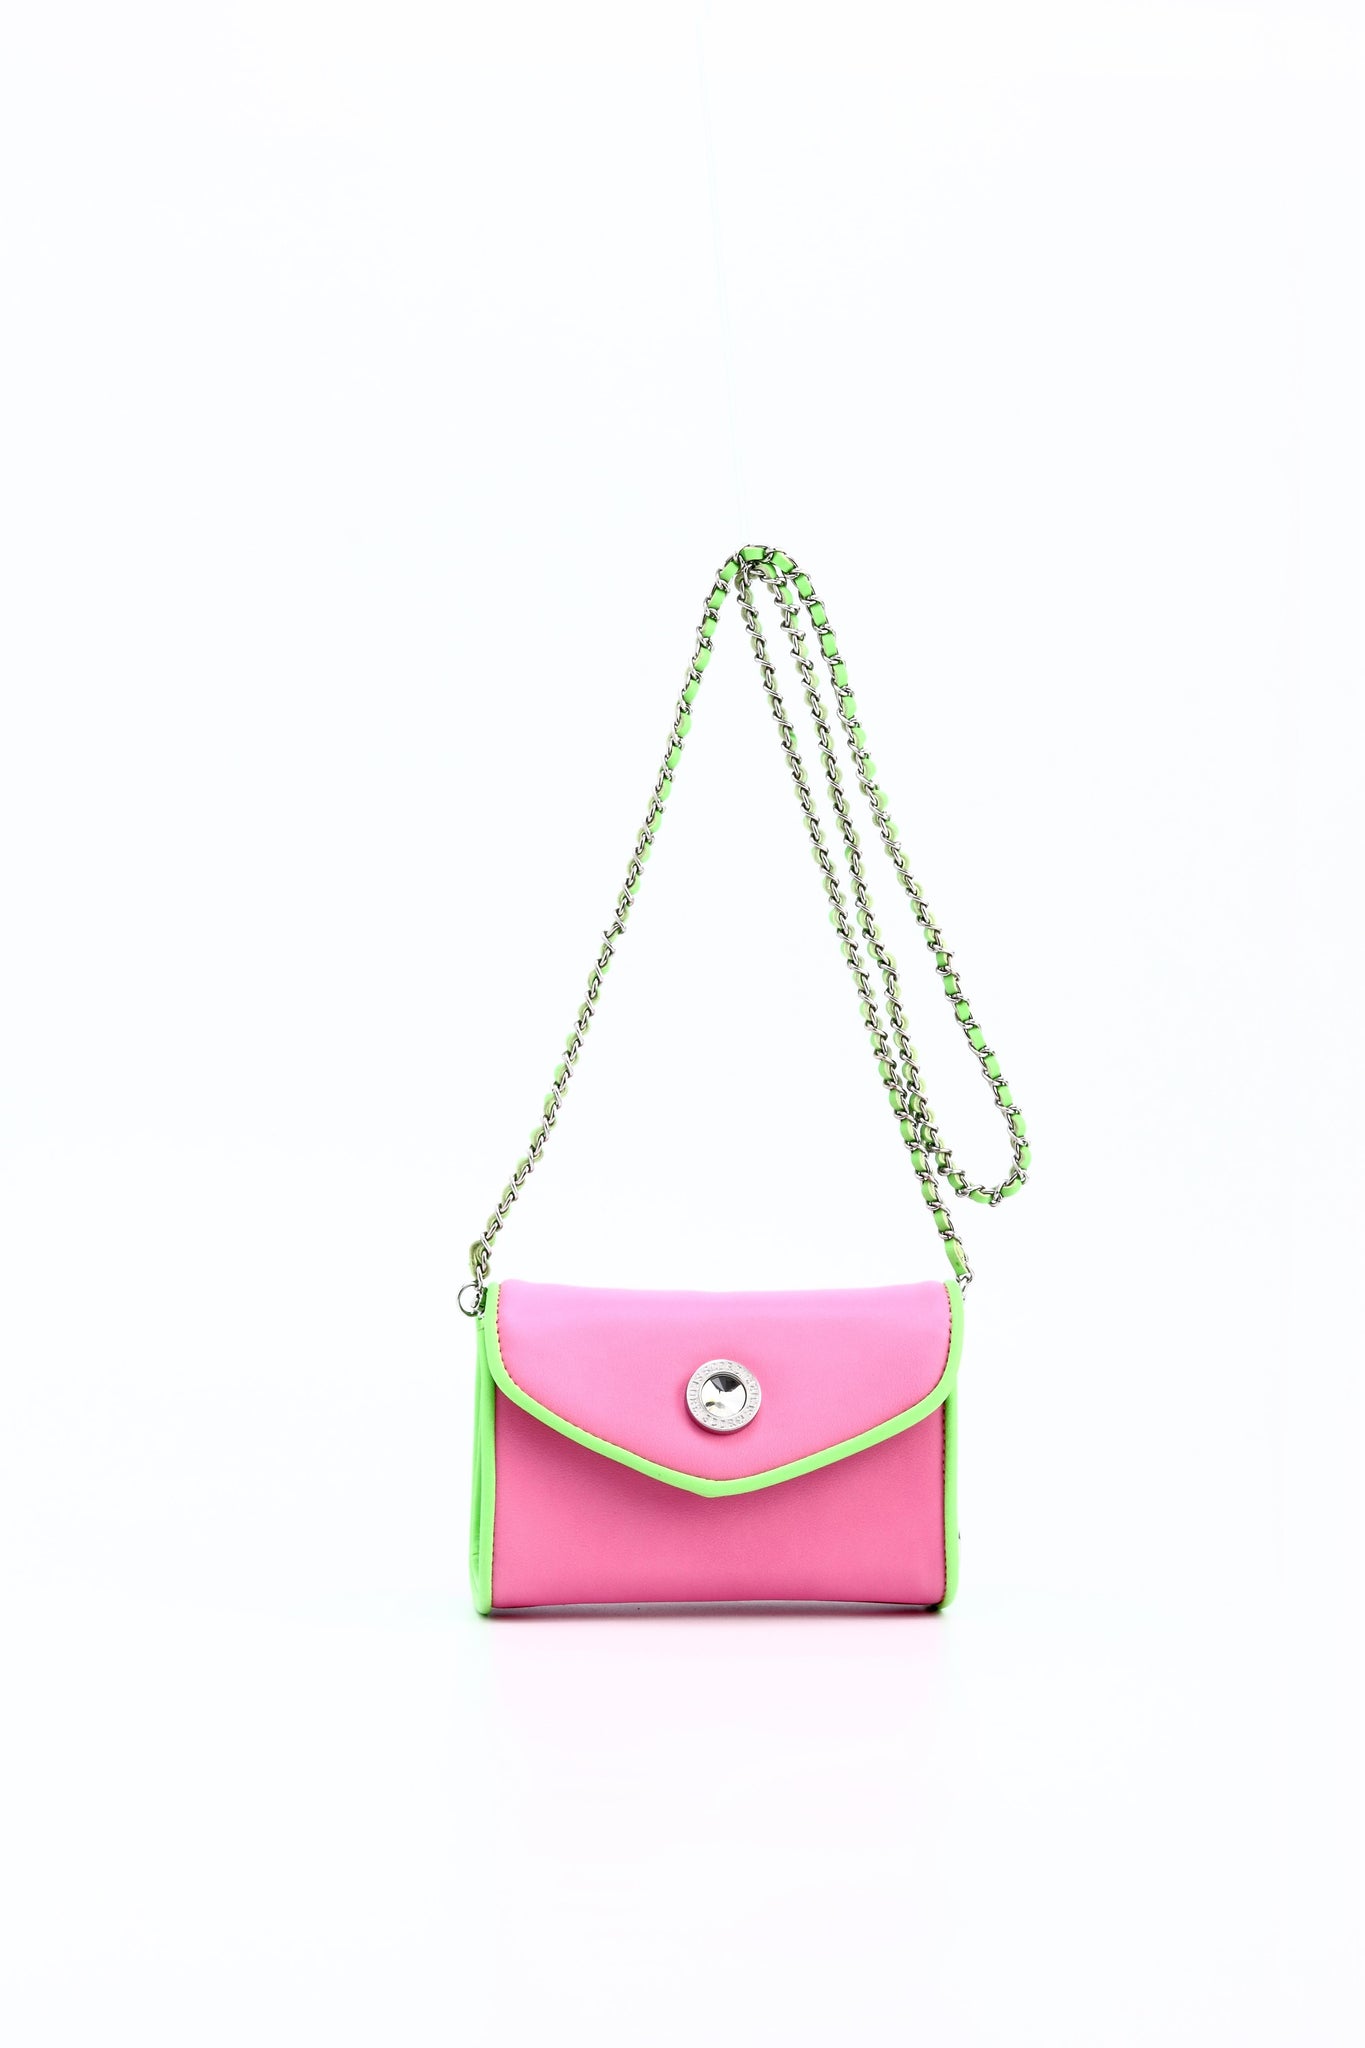 Juicy Couture Green Handbag Charm - Gem